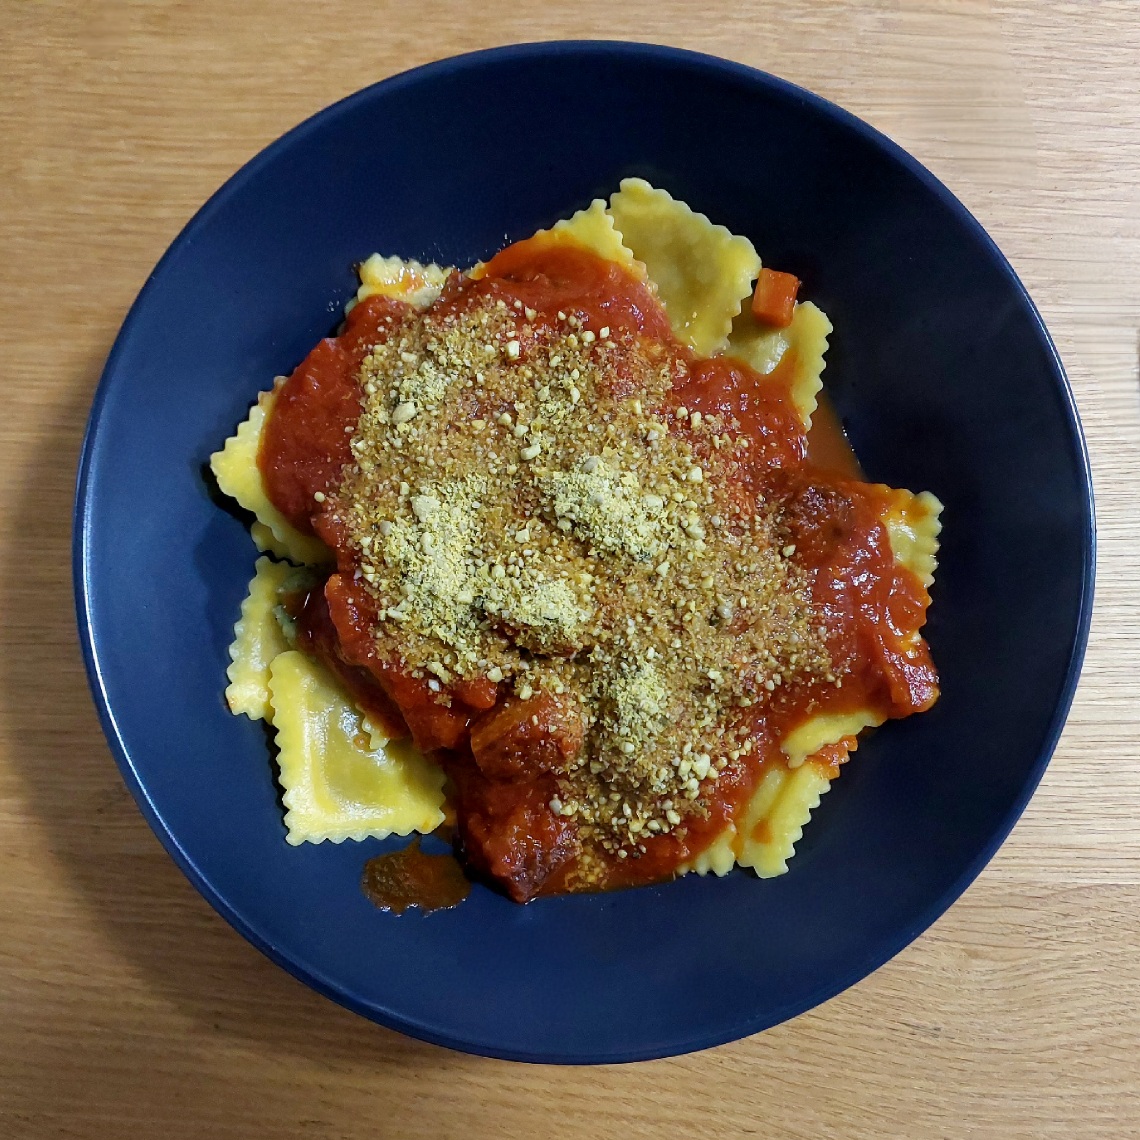 Vegan Ravioli with Tomato Sauce & Cashew "Parmesan"